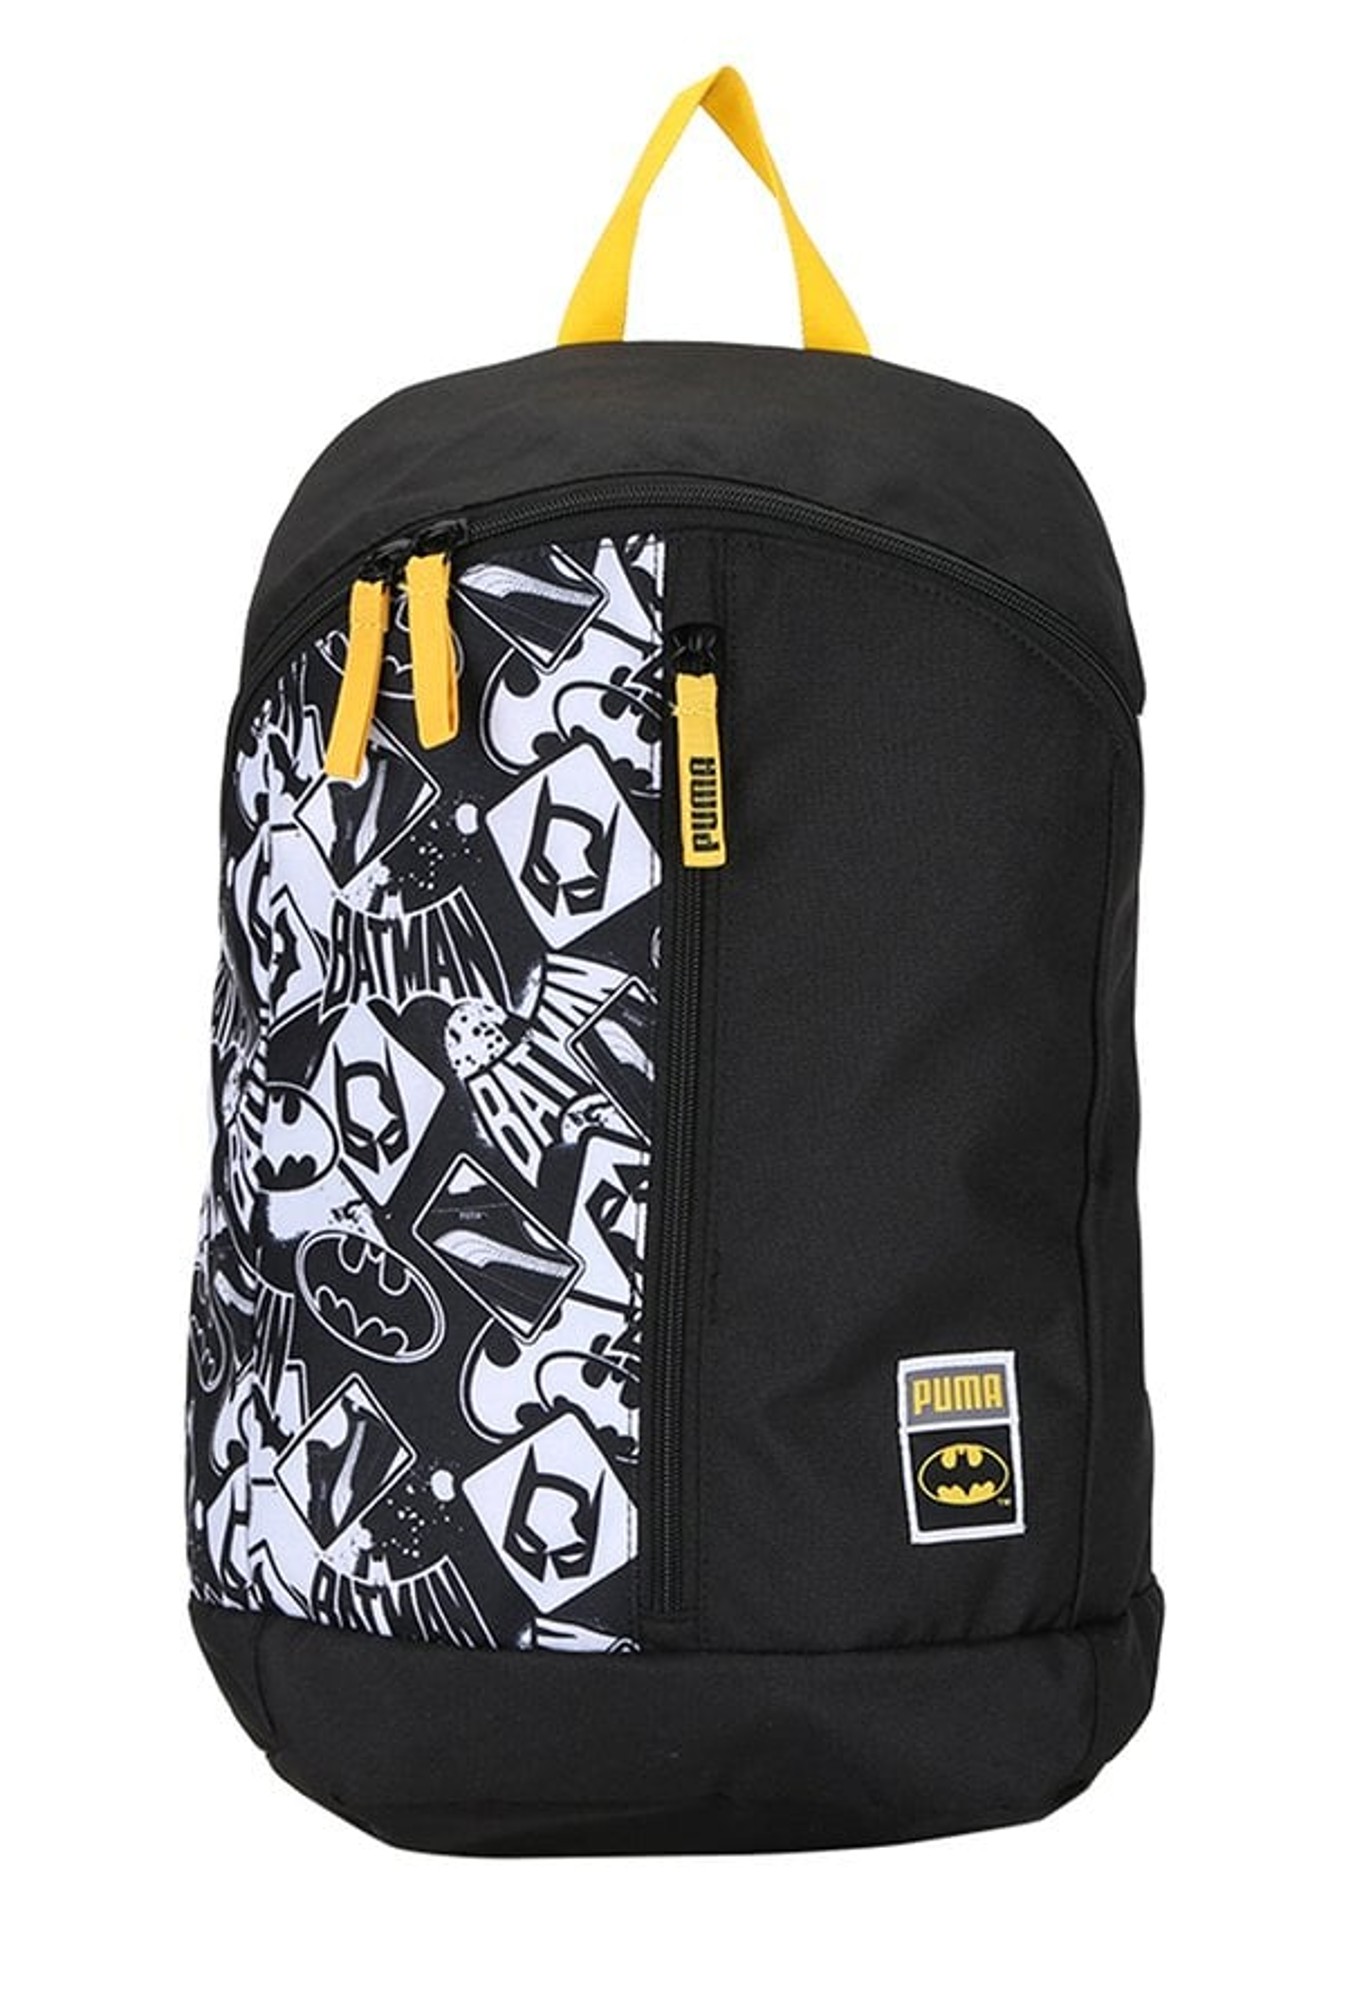 puma batman backpack